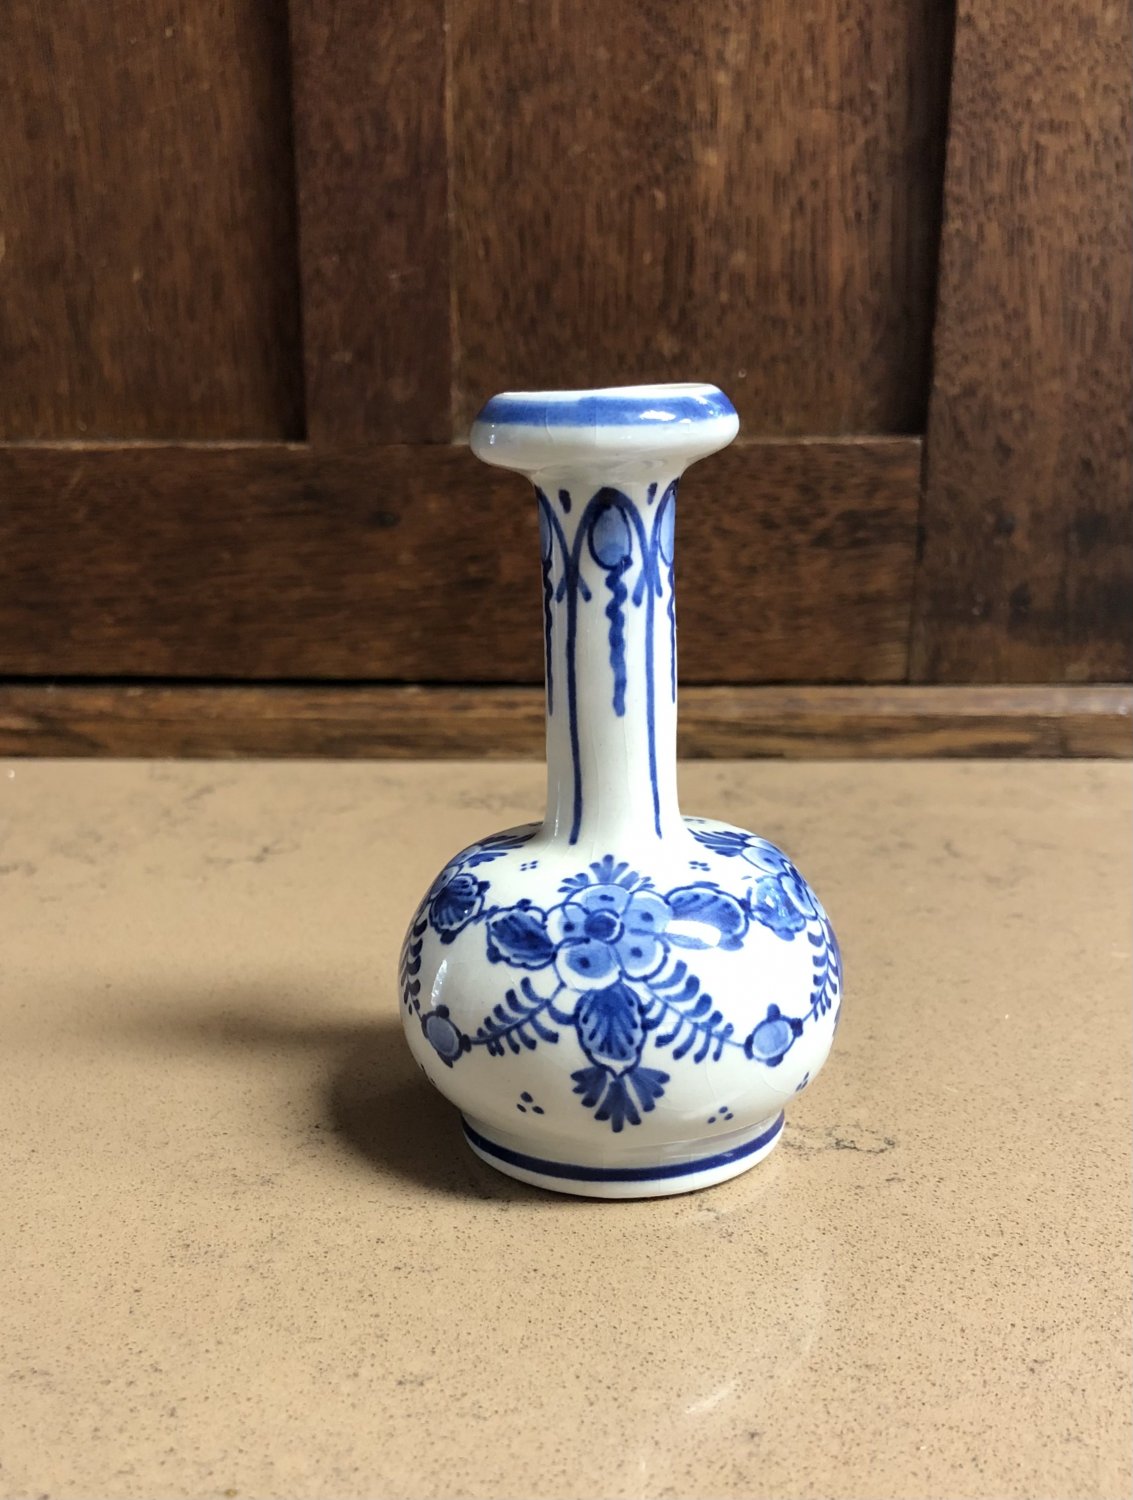 1956 Royal Delft De Porceleyne Fles Blue and White Miniature Vase